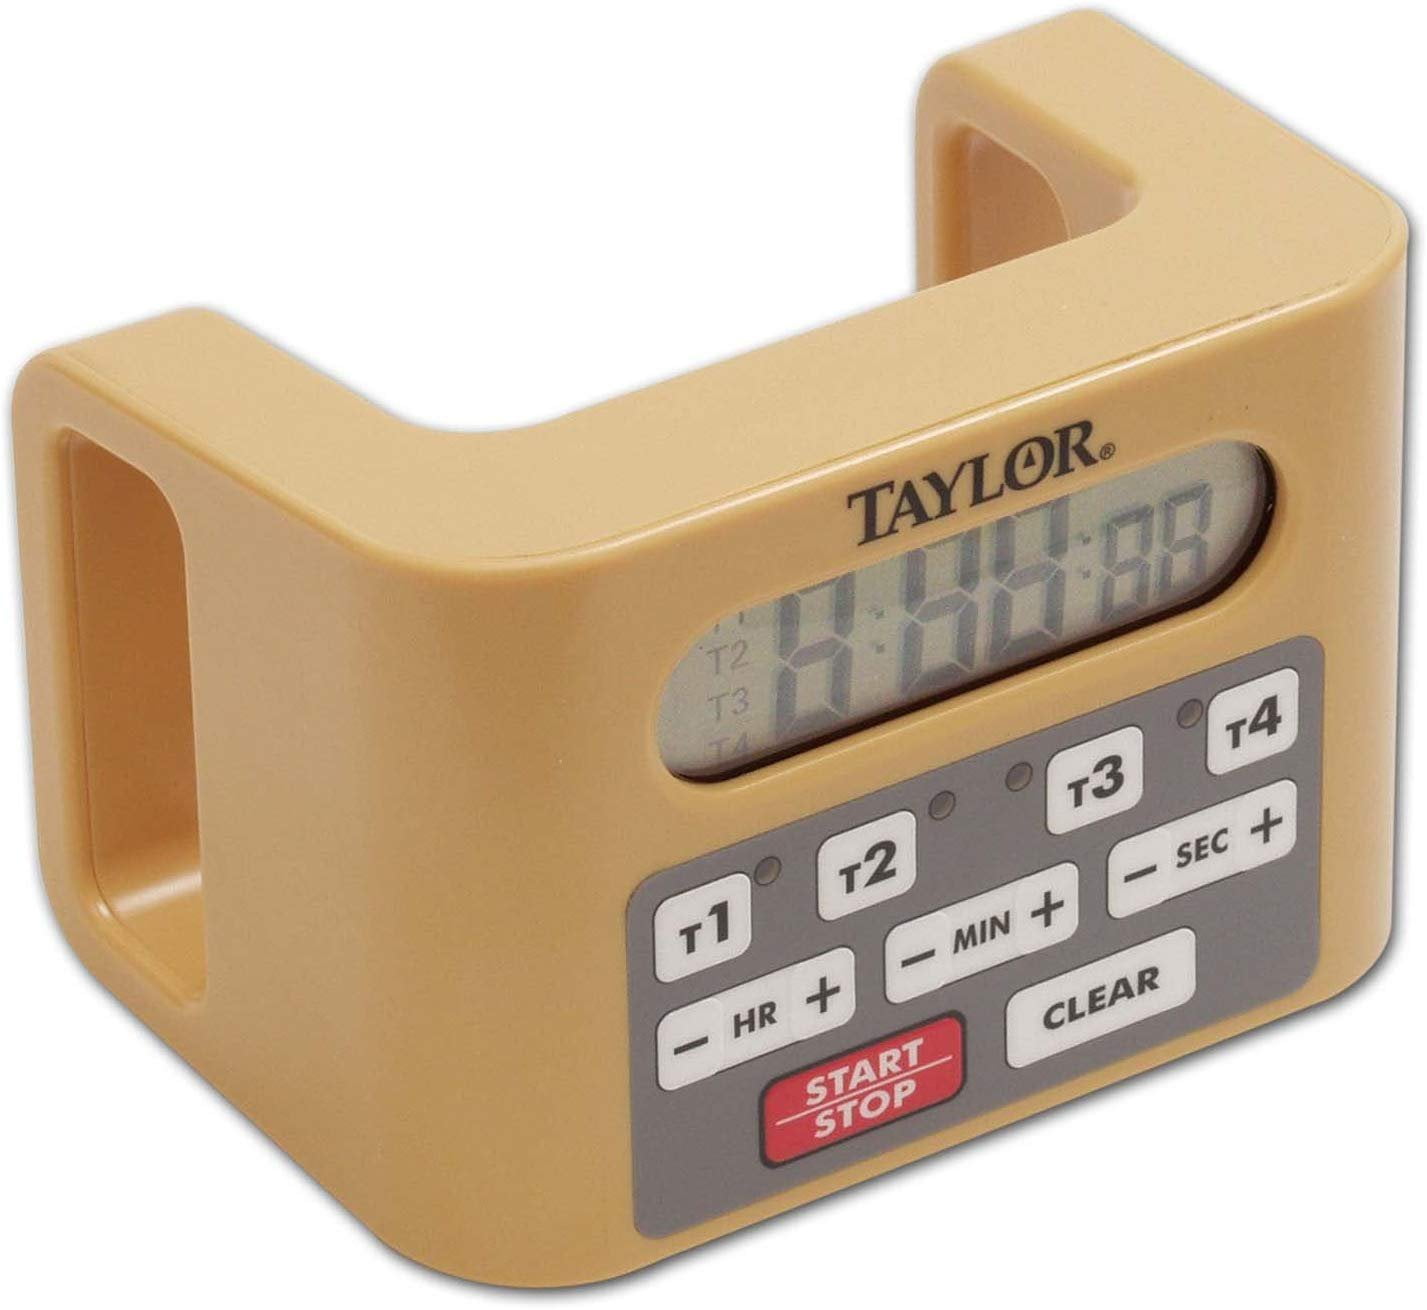 Taylor Precision 5839N 4 Event Digital Timer